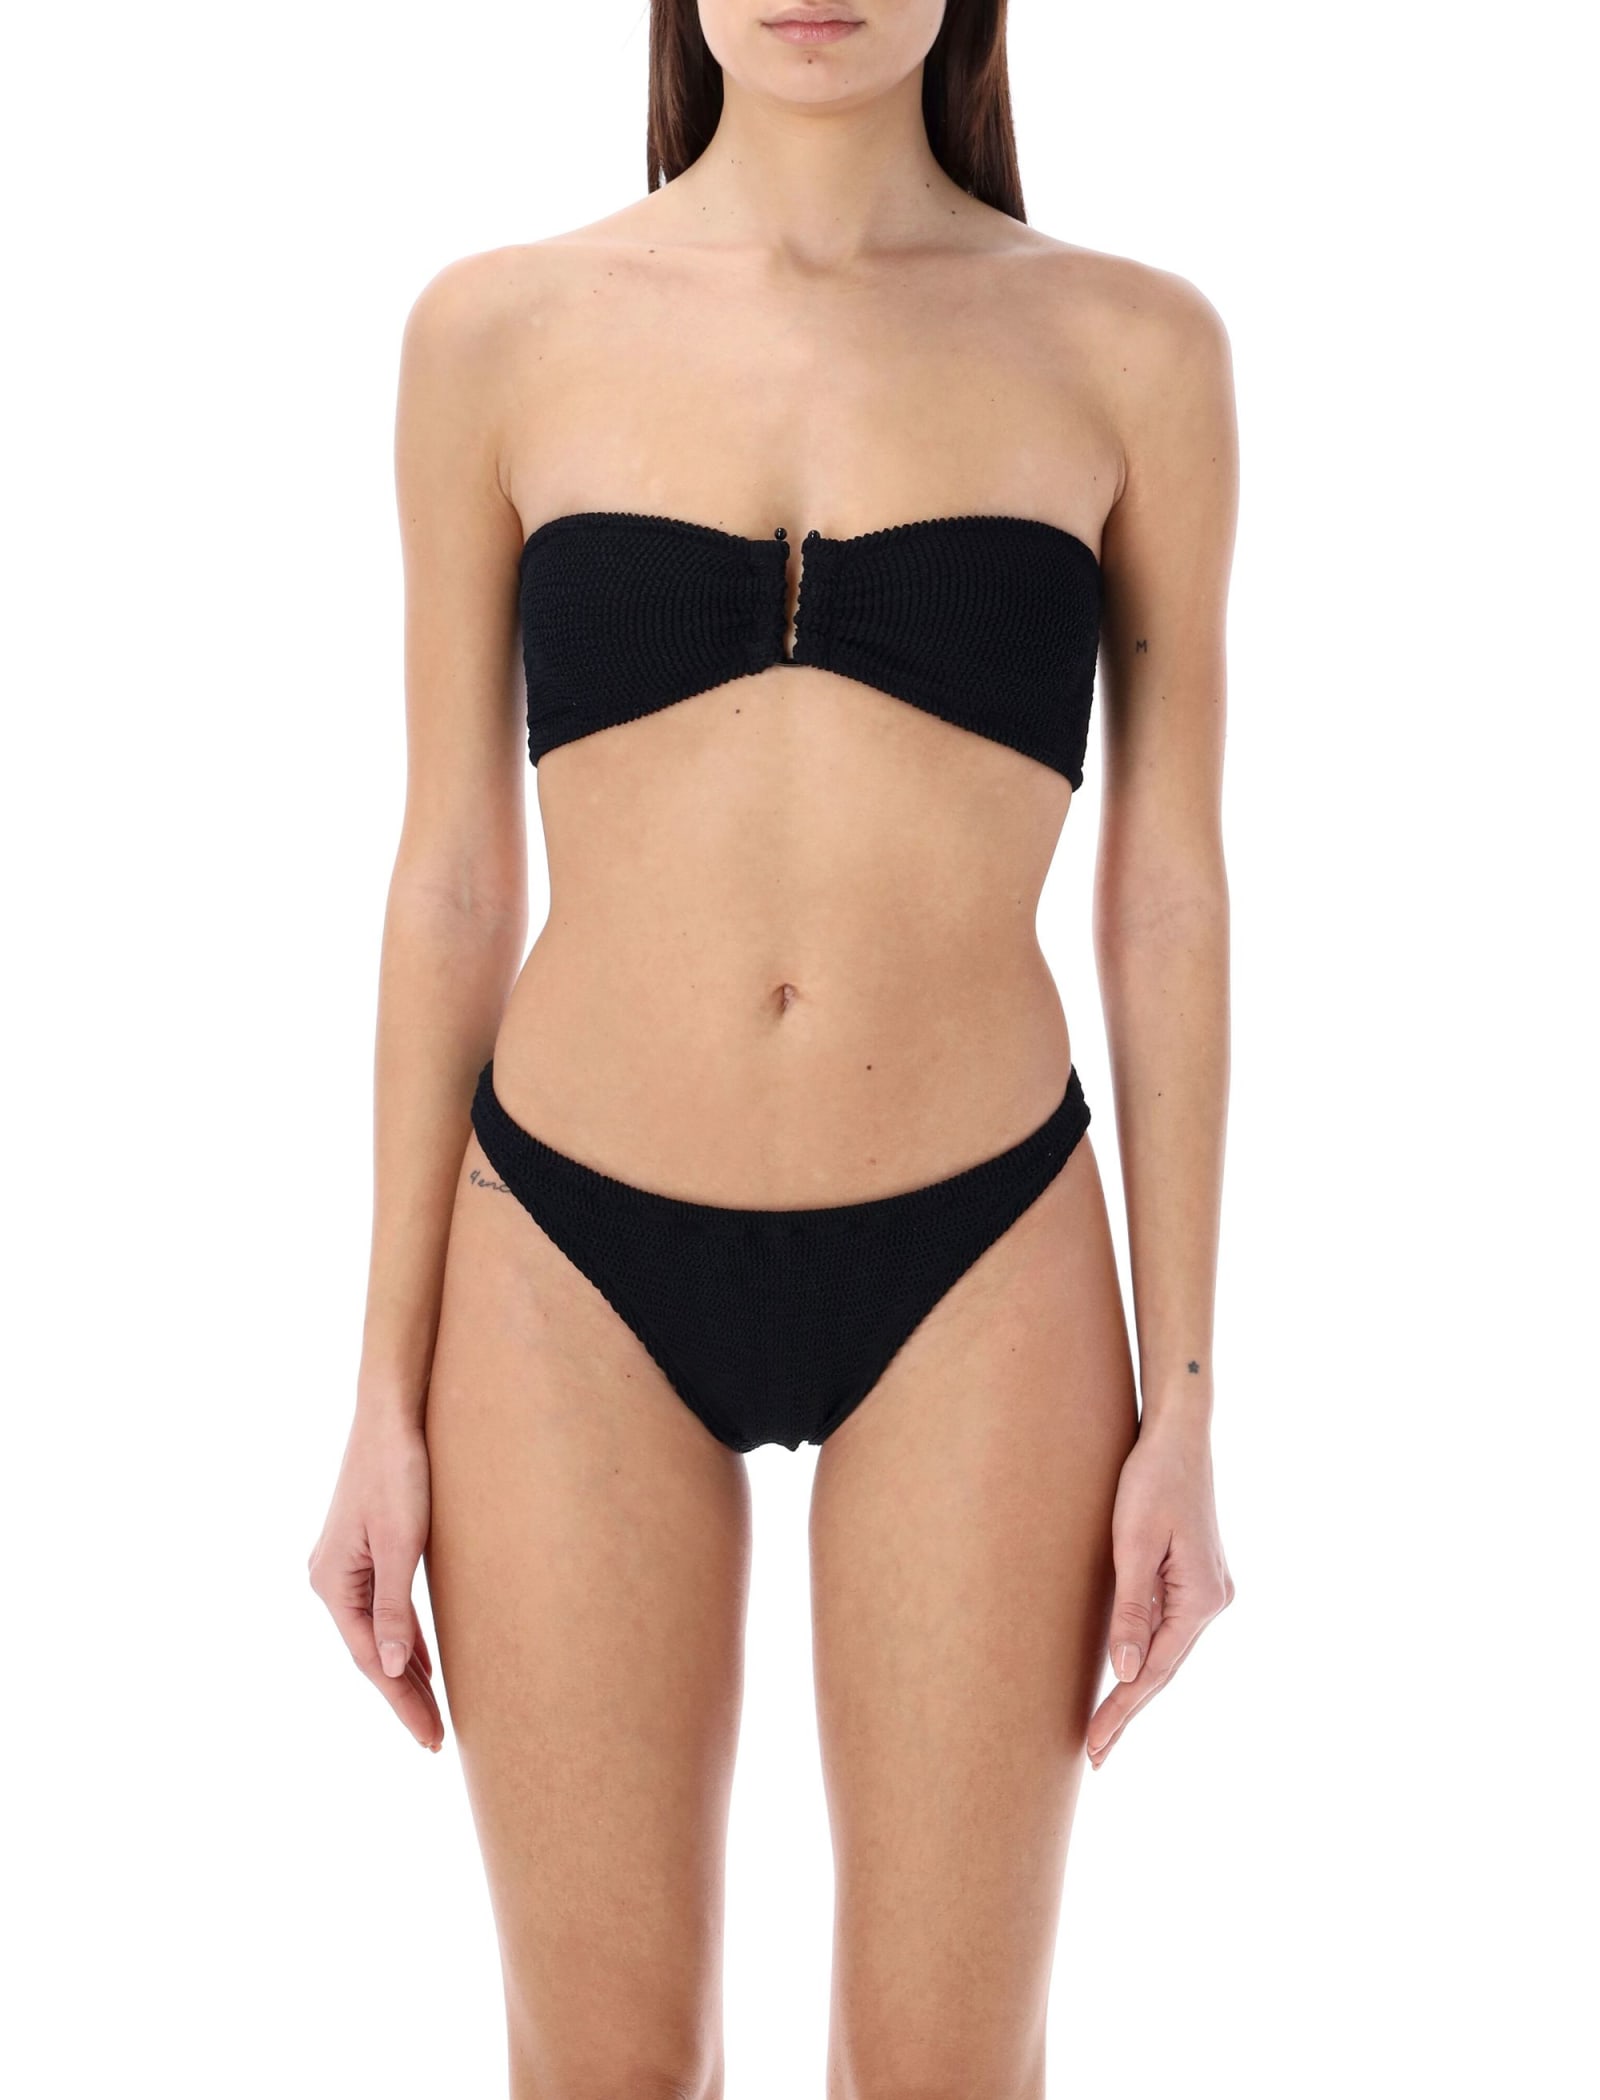 Ausilia Scrunch Bikini Set